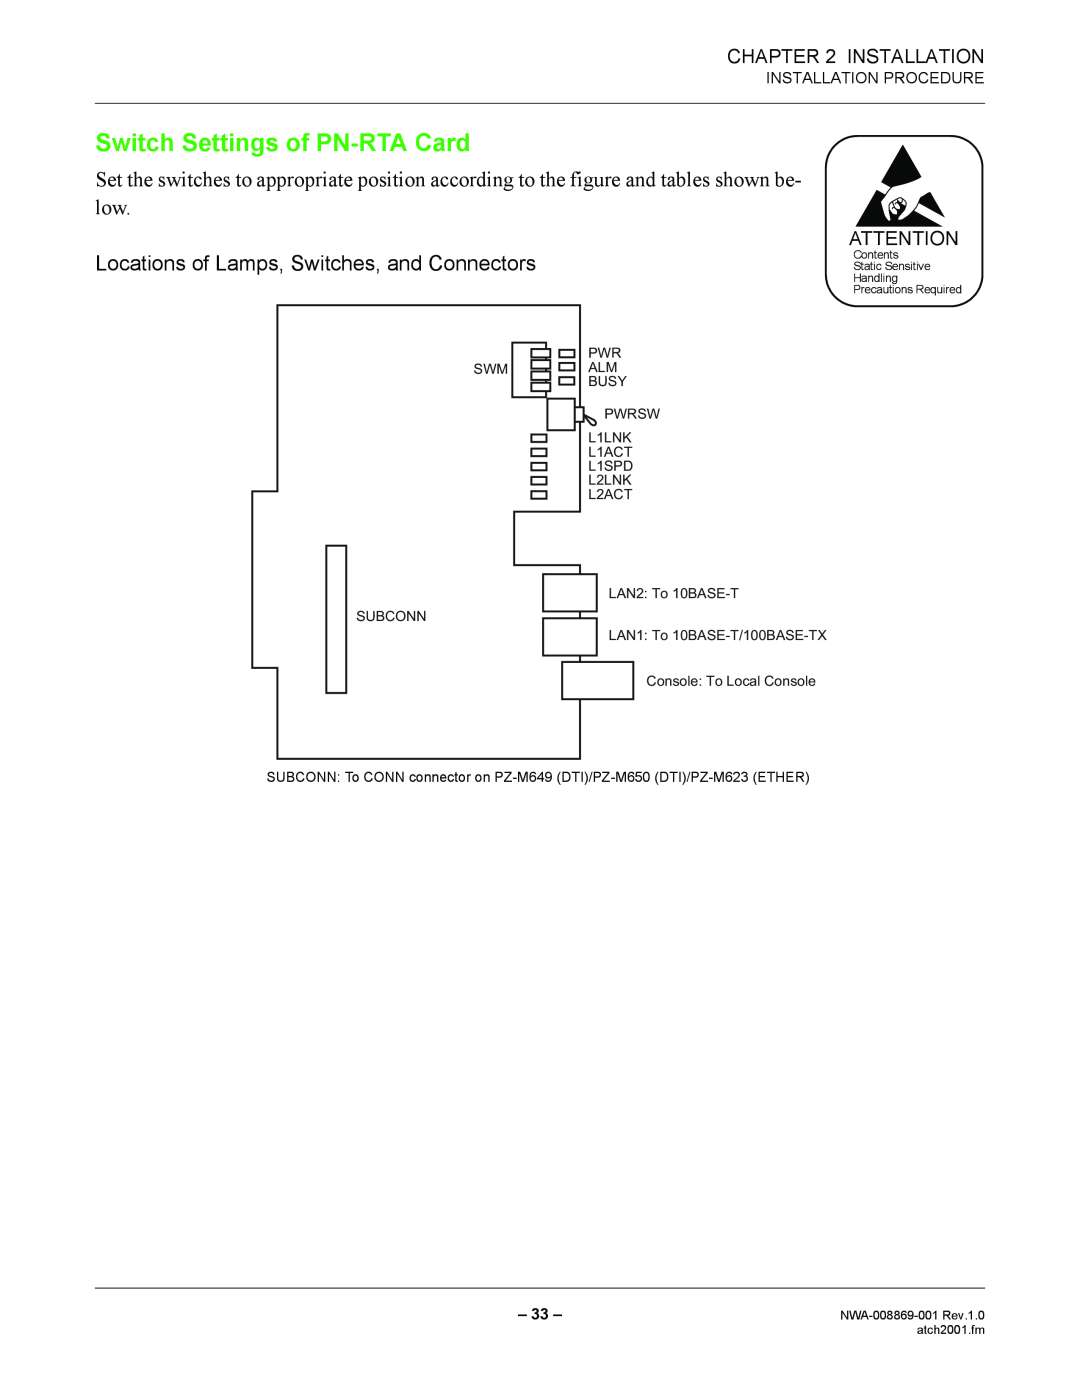 NEC manual Switch Settings of PN-RTA Card, Installation Procedure, NWA-008869-001 Rev.1.0 